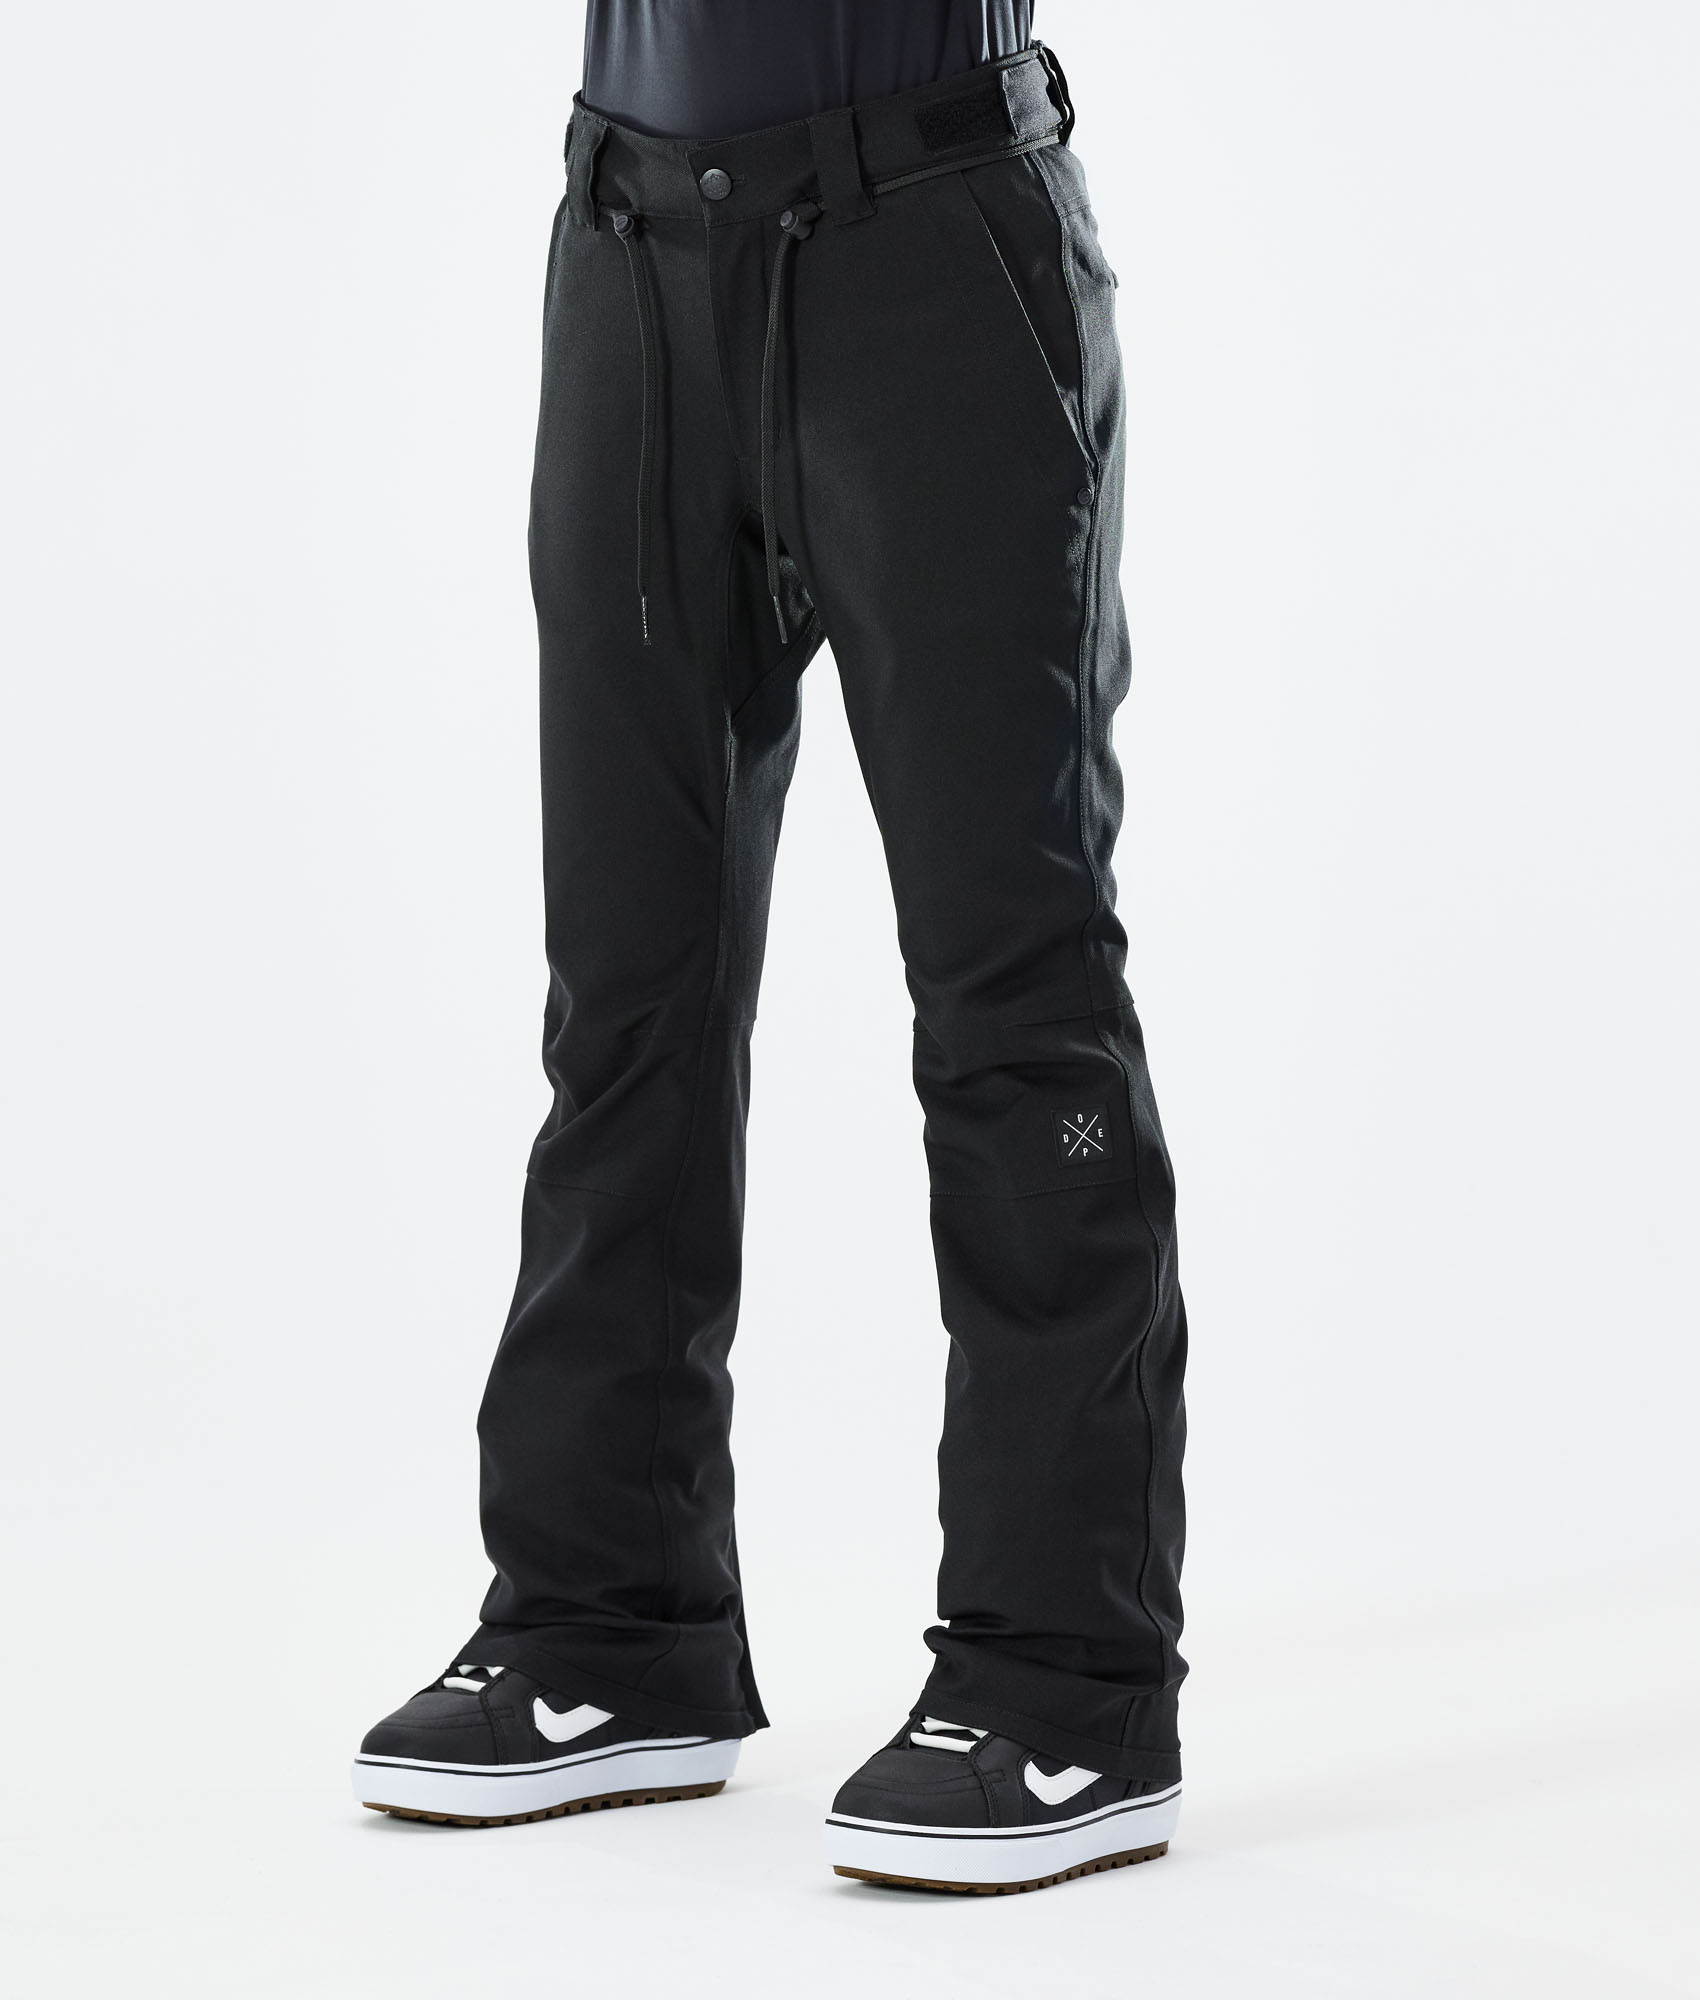 WearColour Guard Pant Men's Thermal Base Layer Trousers 2019 